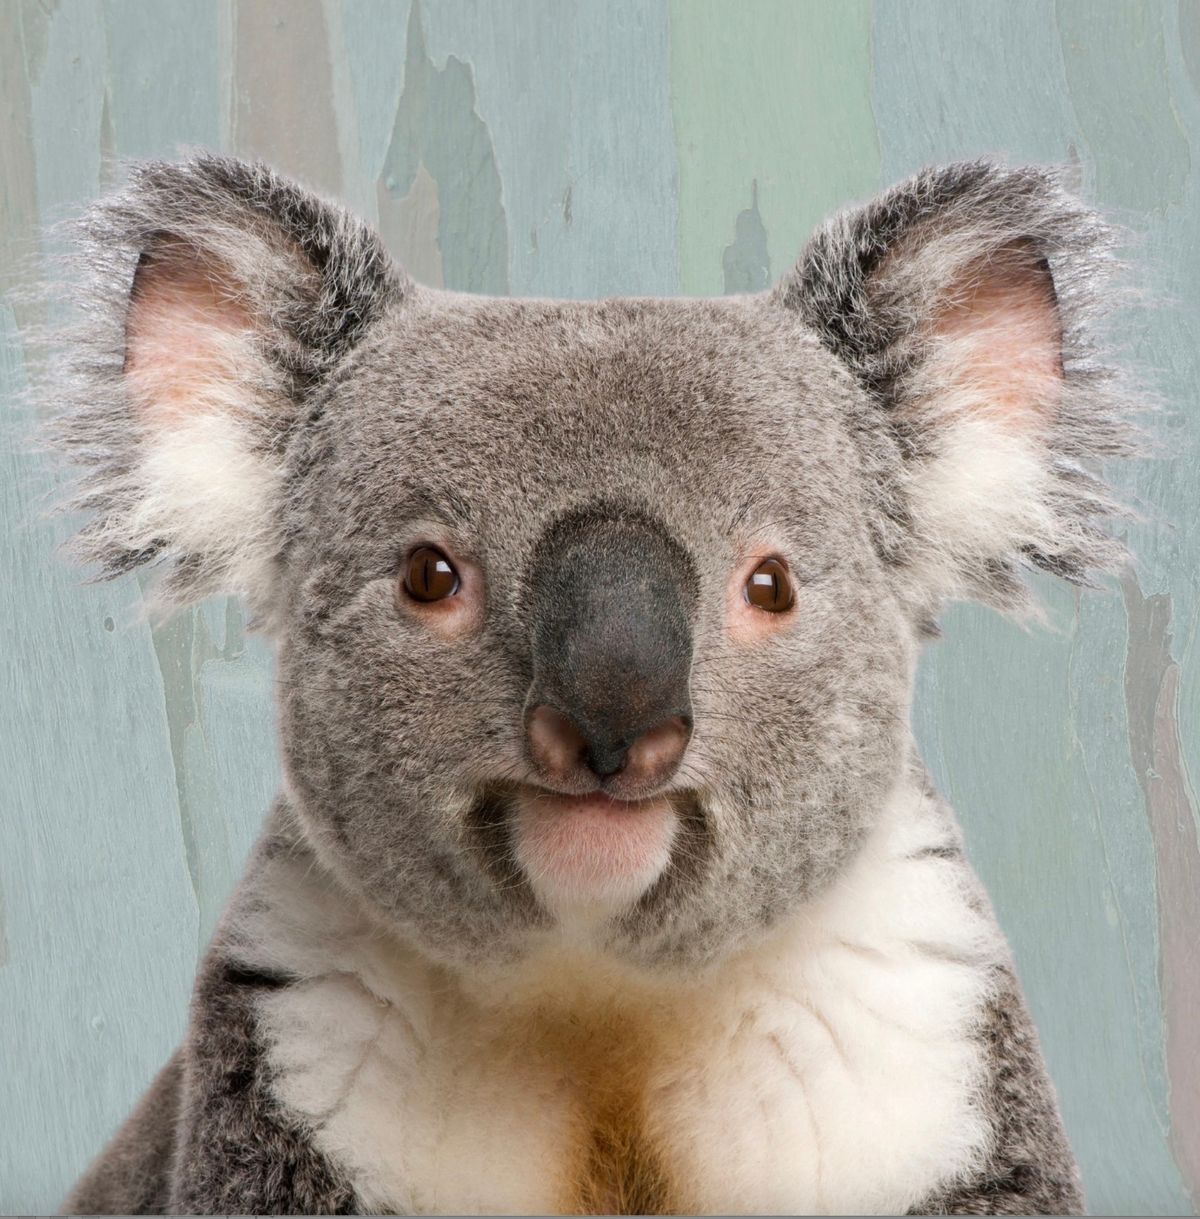 Ballarat Screening: The Koalas film with Special Guest Speakers